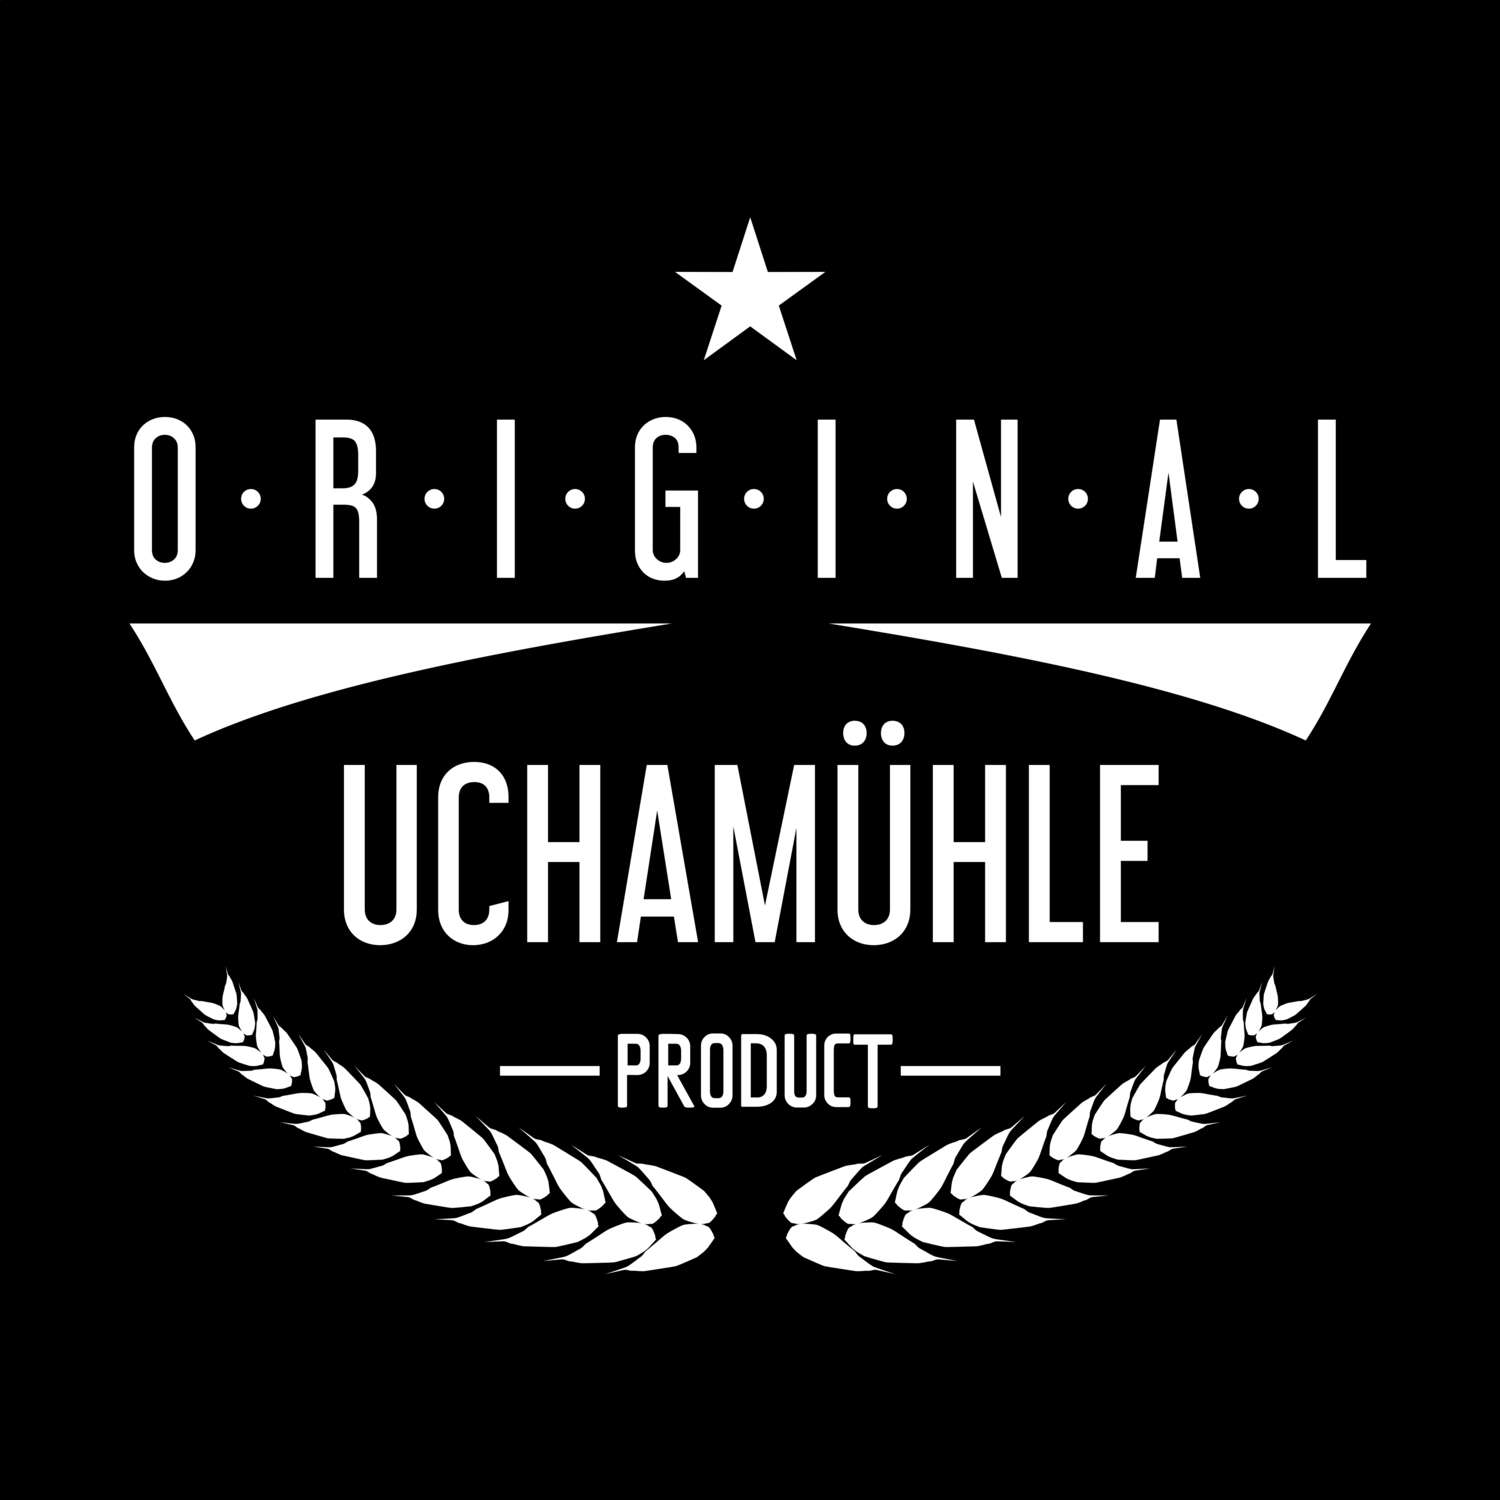 Uchamühle T-Shirt »Original Product«